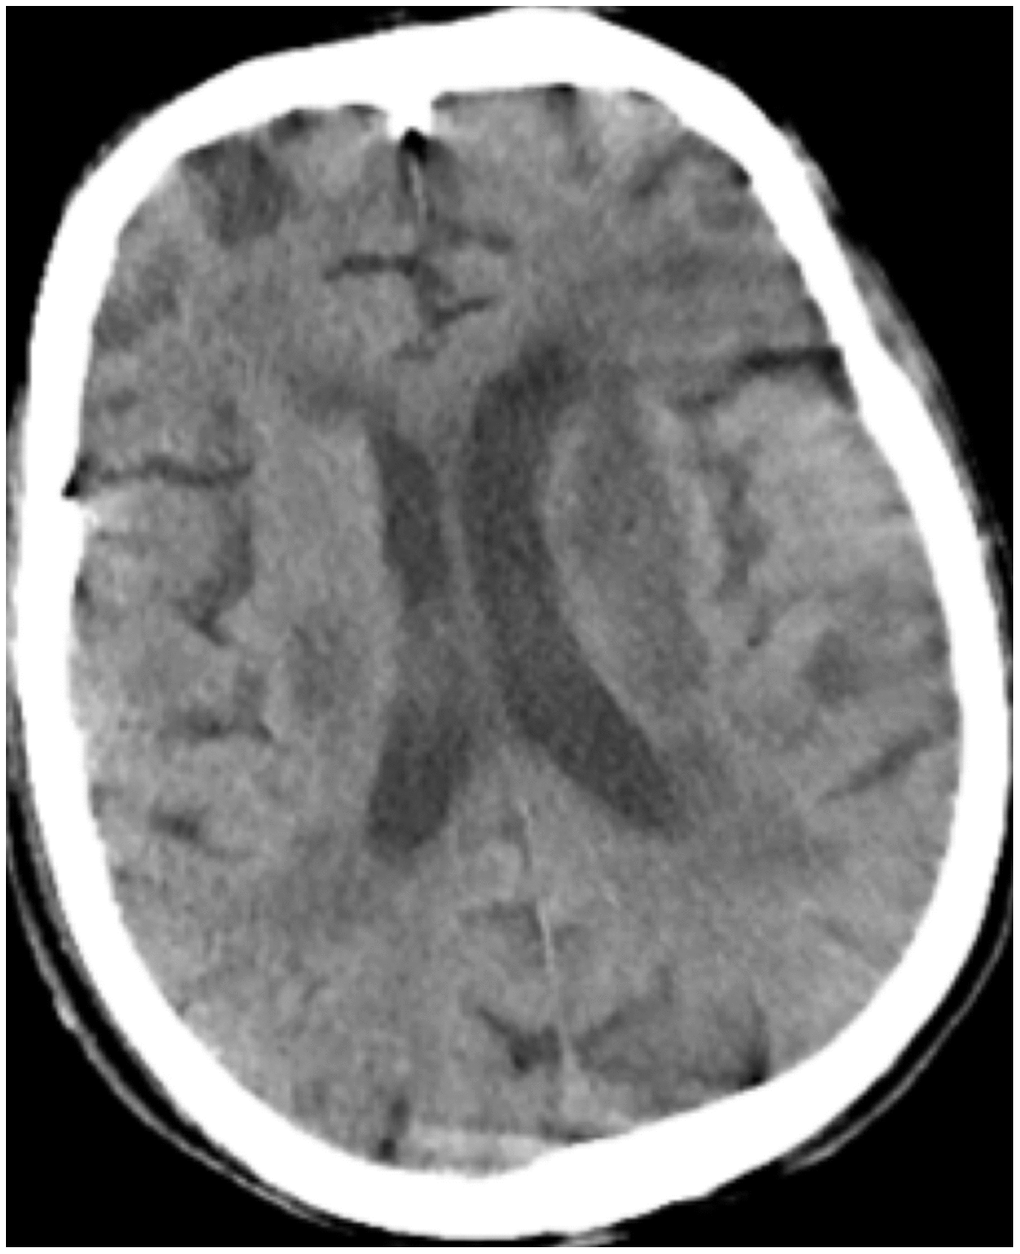 Case 6 multiple flaky low-density shadow on the parietal lobe.